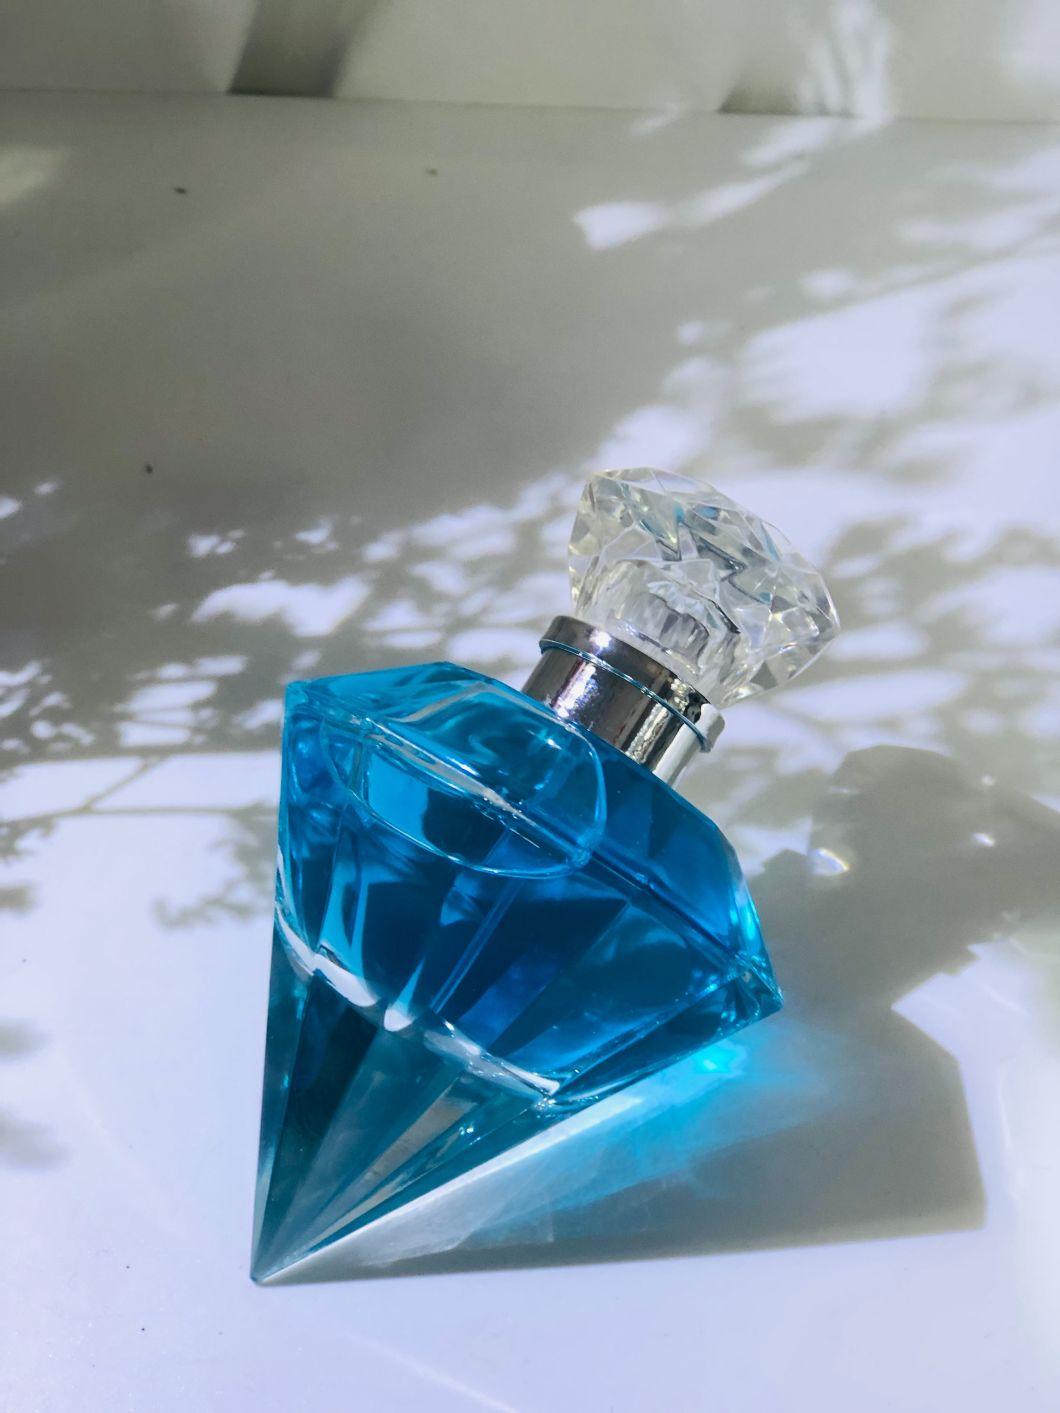 Custom Luxury Crystal 50ml 80ml 100ml Empty Perfume Bottle with Box